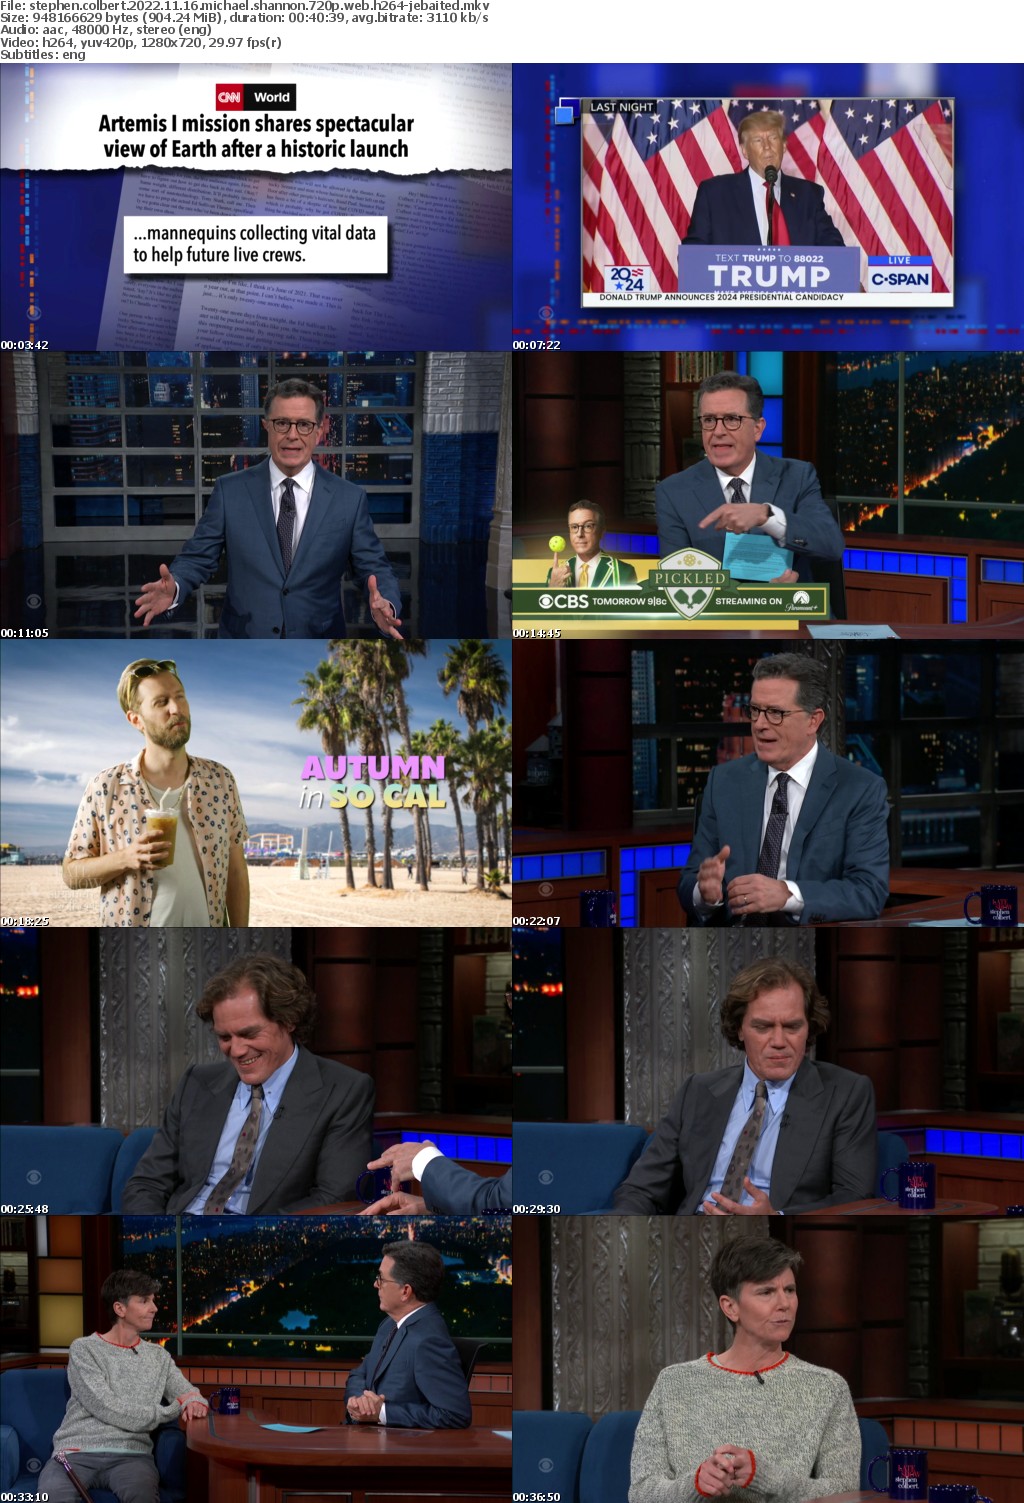 Stephen Colbert 2022 11 16 Michael Shannon 720p WEB H264-JEBAITED